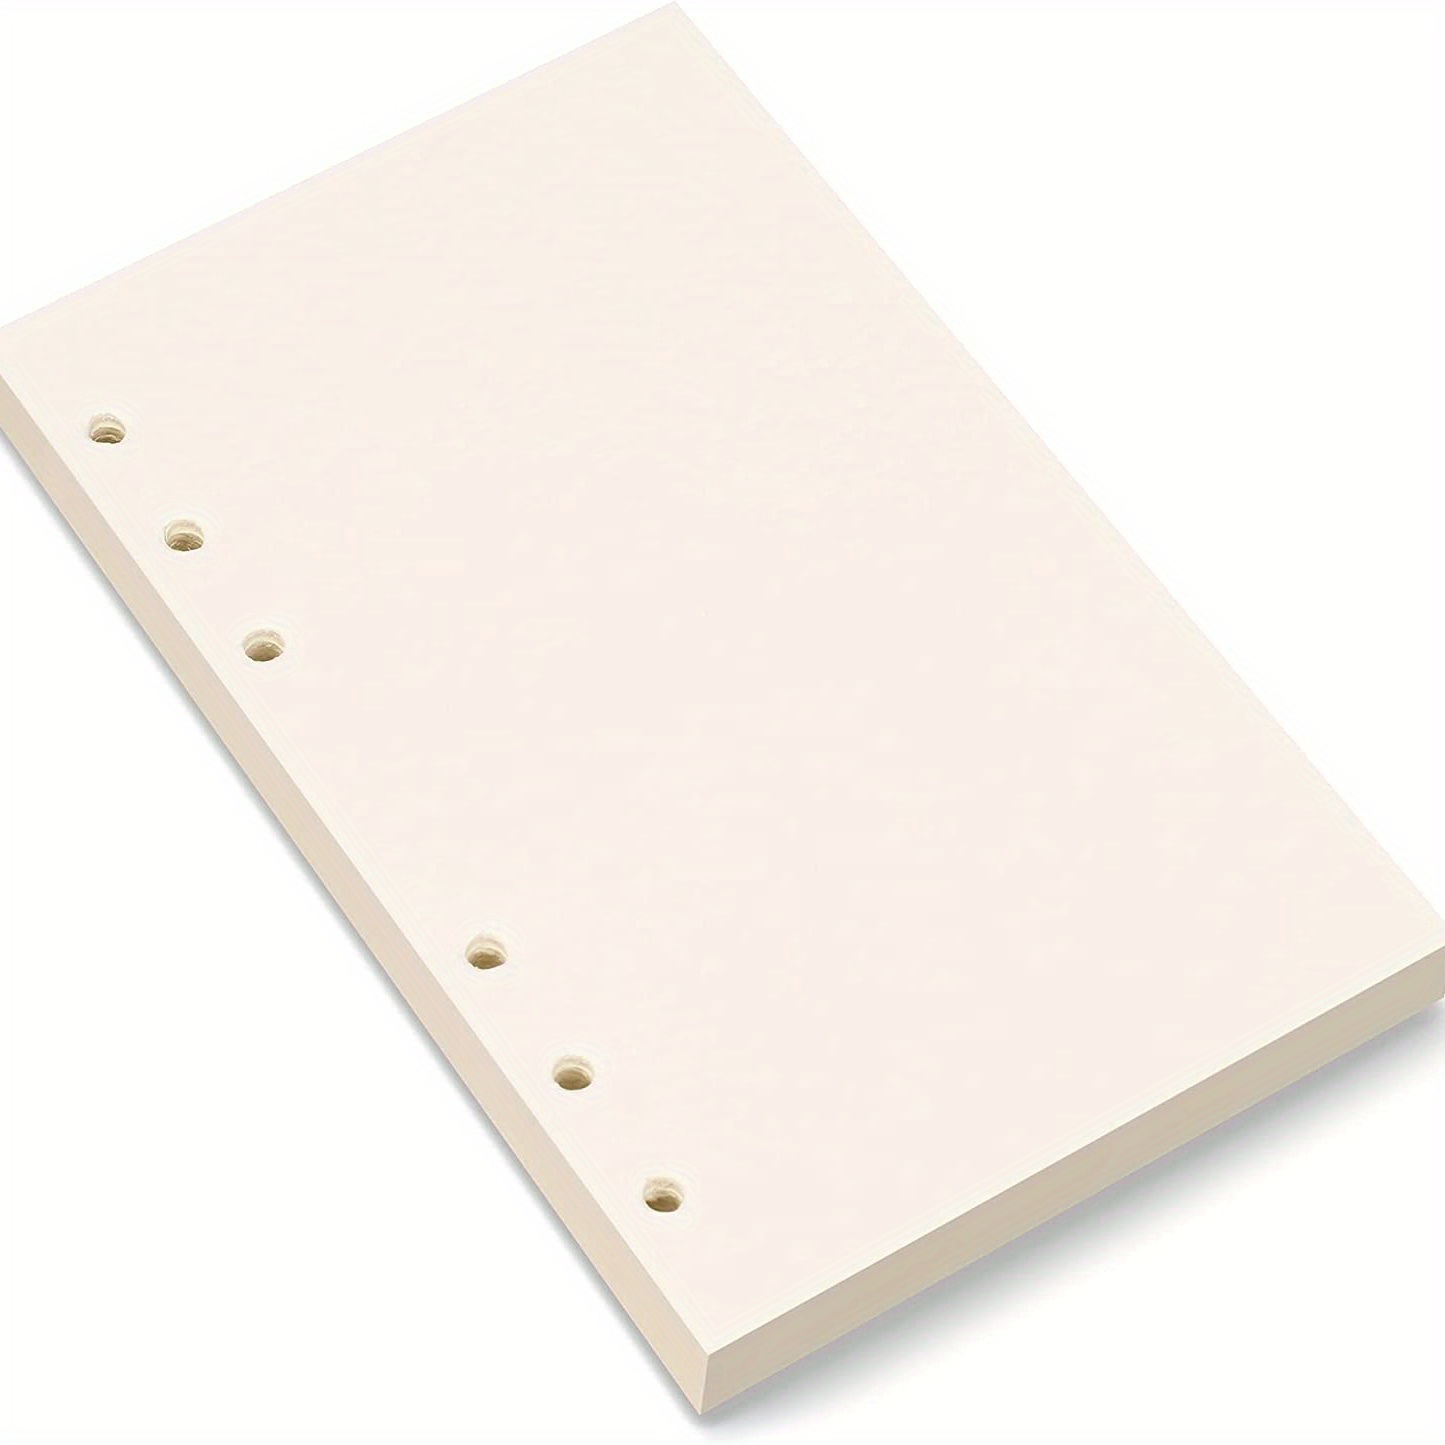 A6 Refill Paper 6 Holes Loose Leaf Paper Notebook Refills 6 - Temu